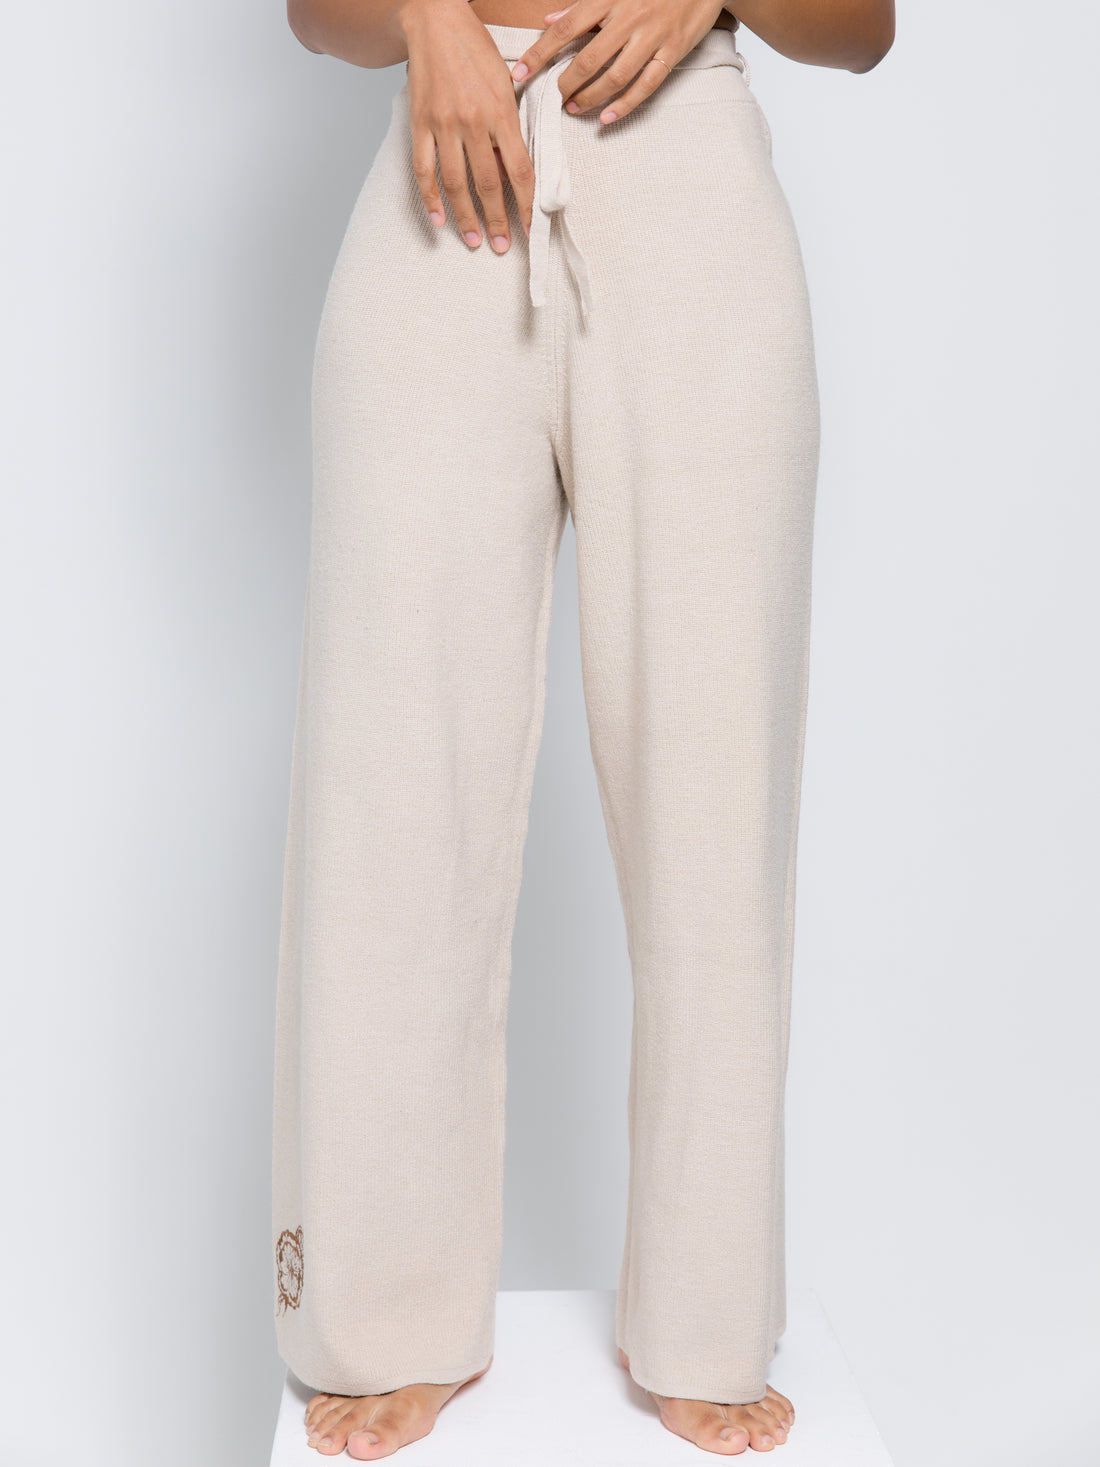 elegant knitted wide pants / oatmeal